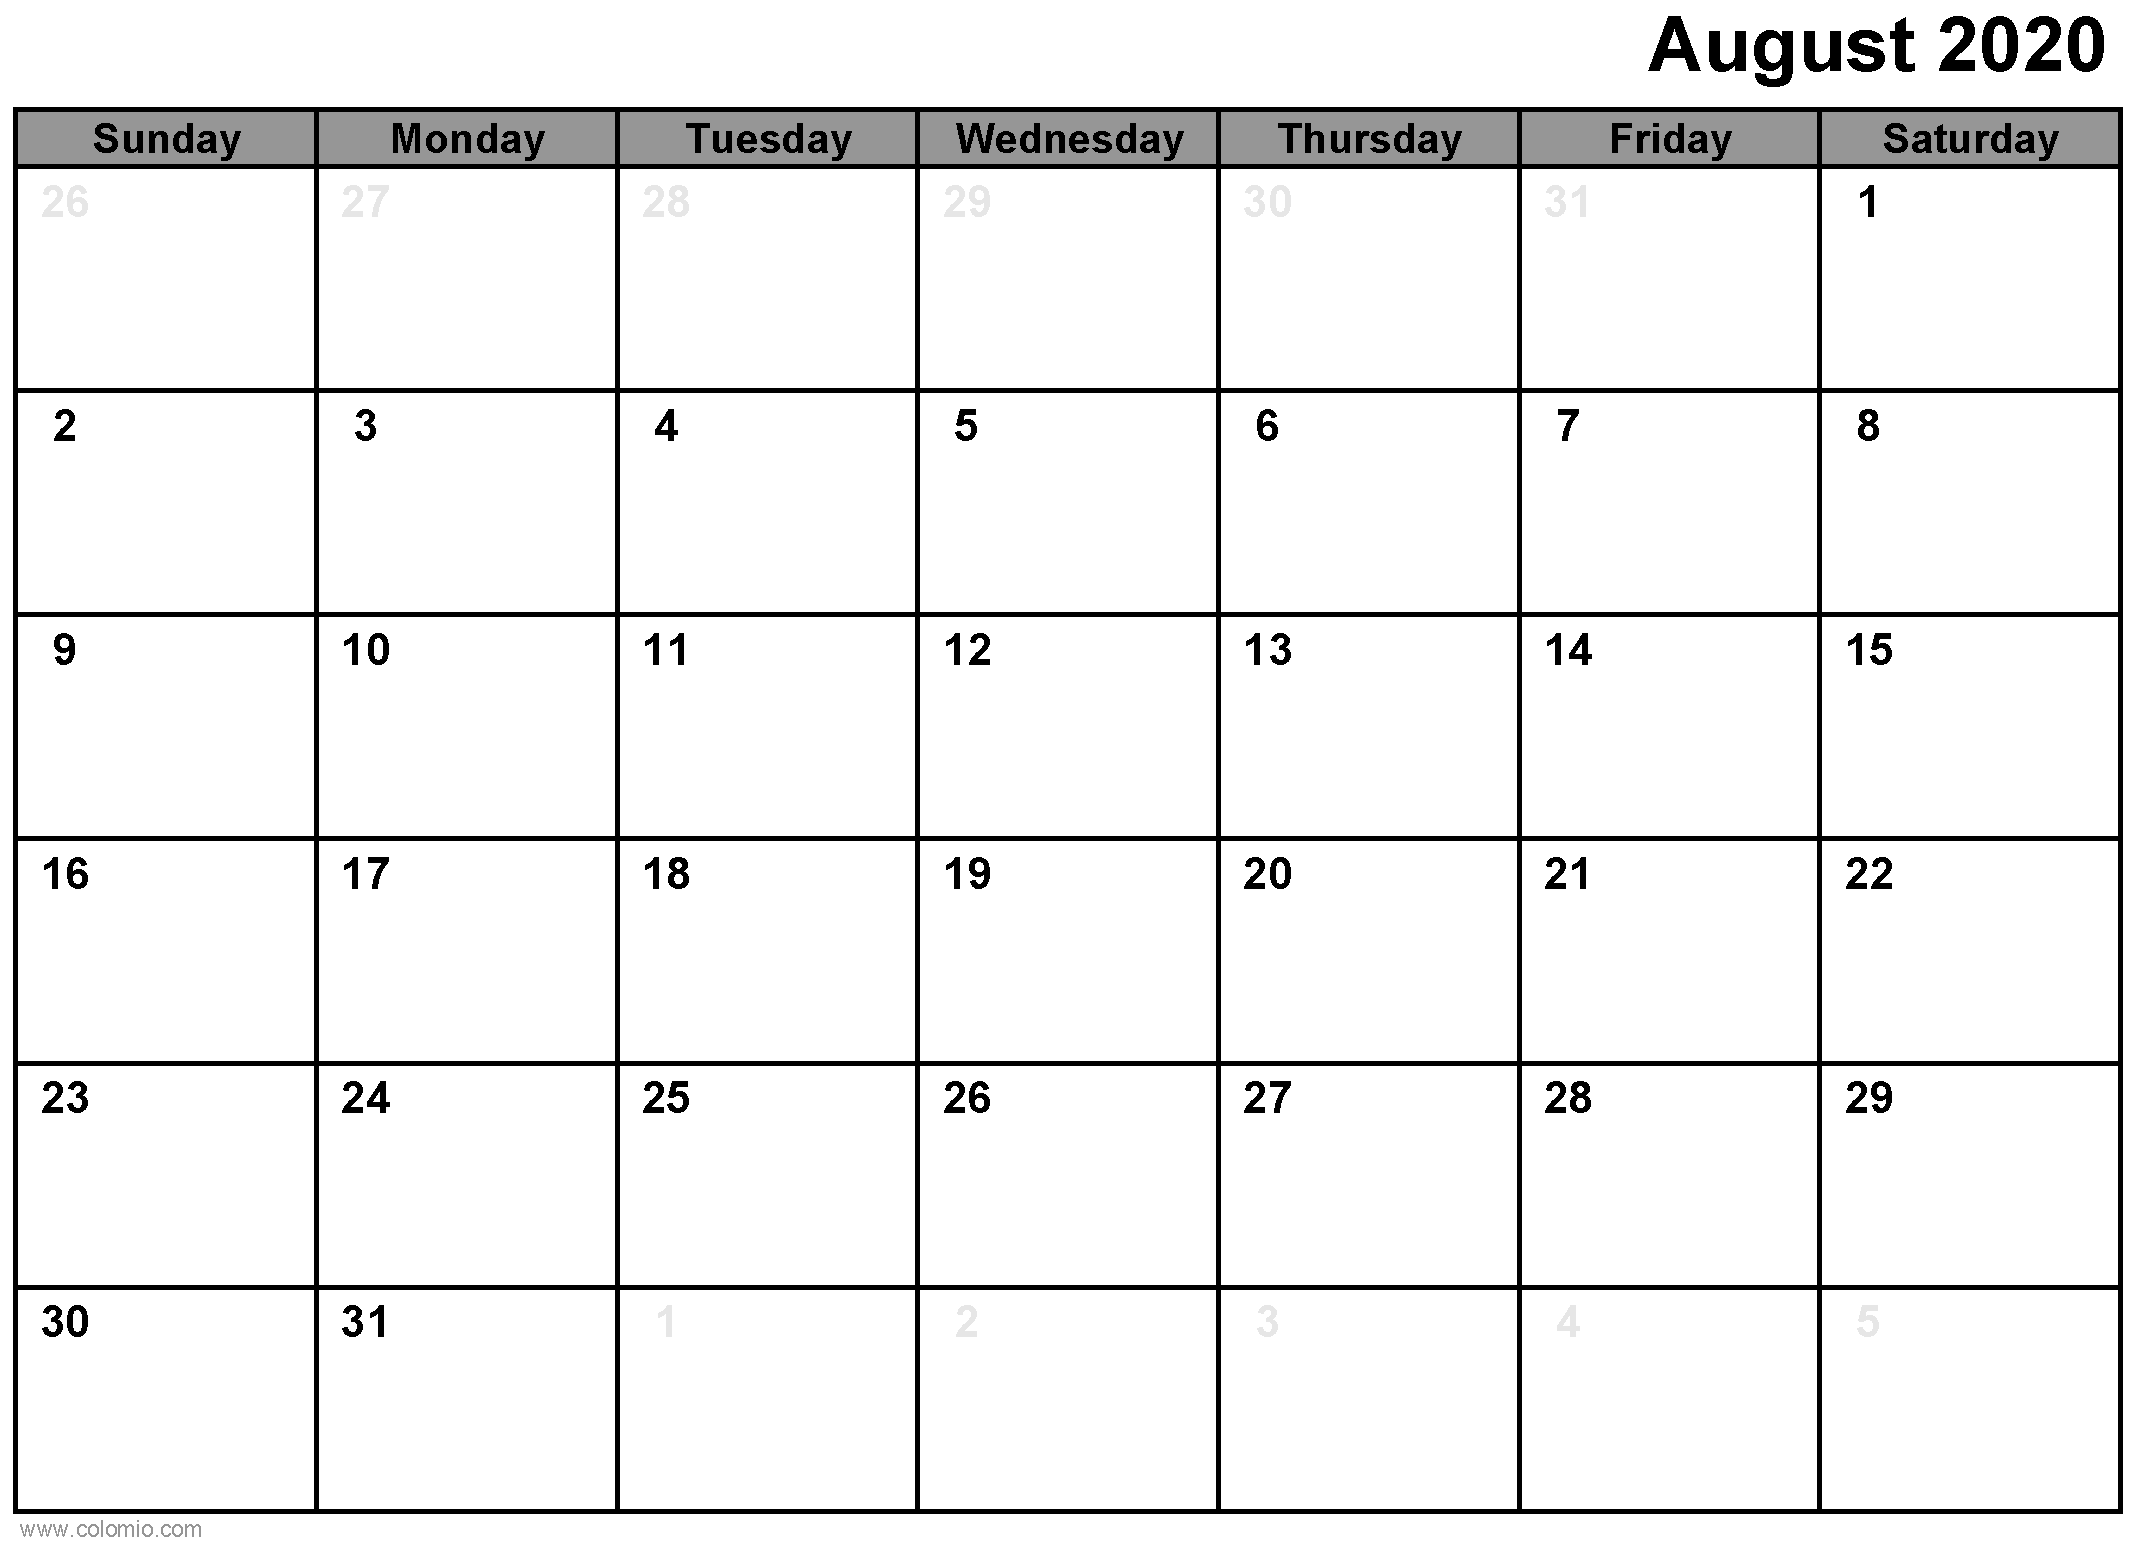 August 2020 Calendar printable